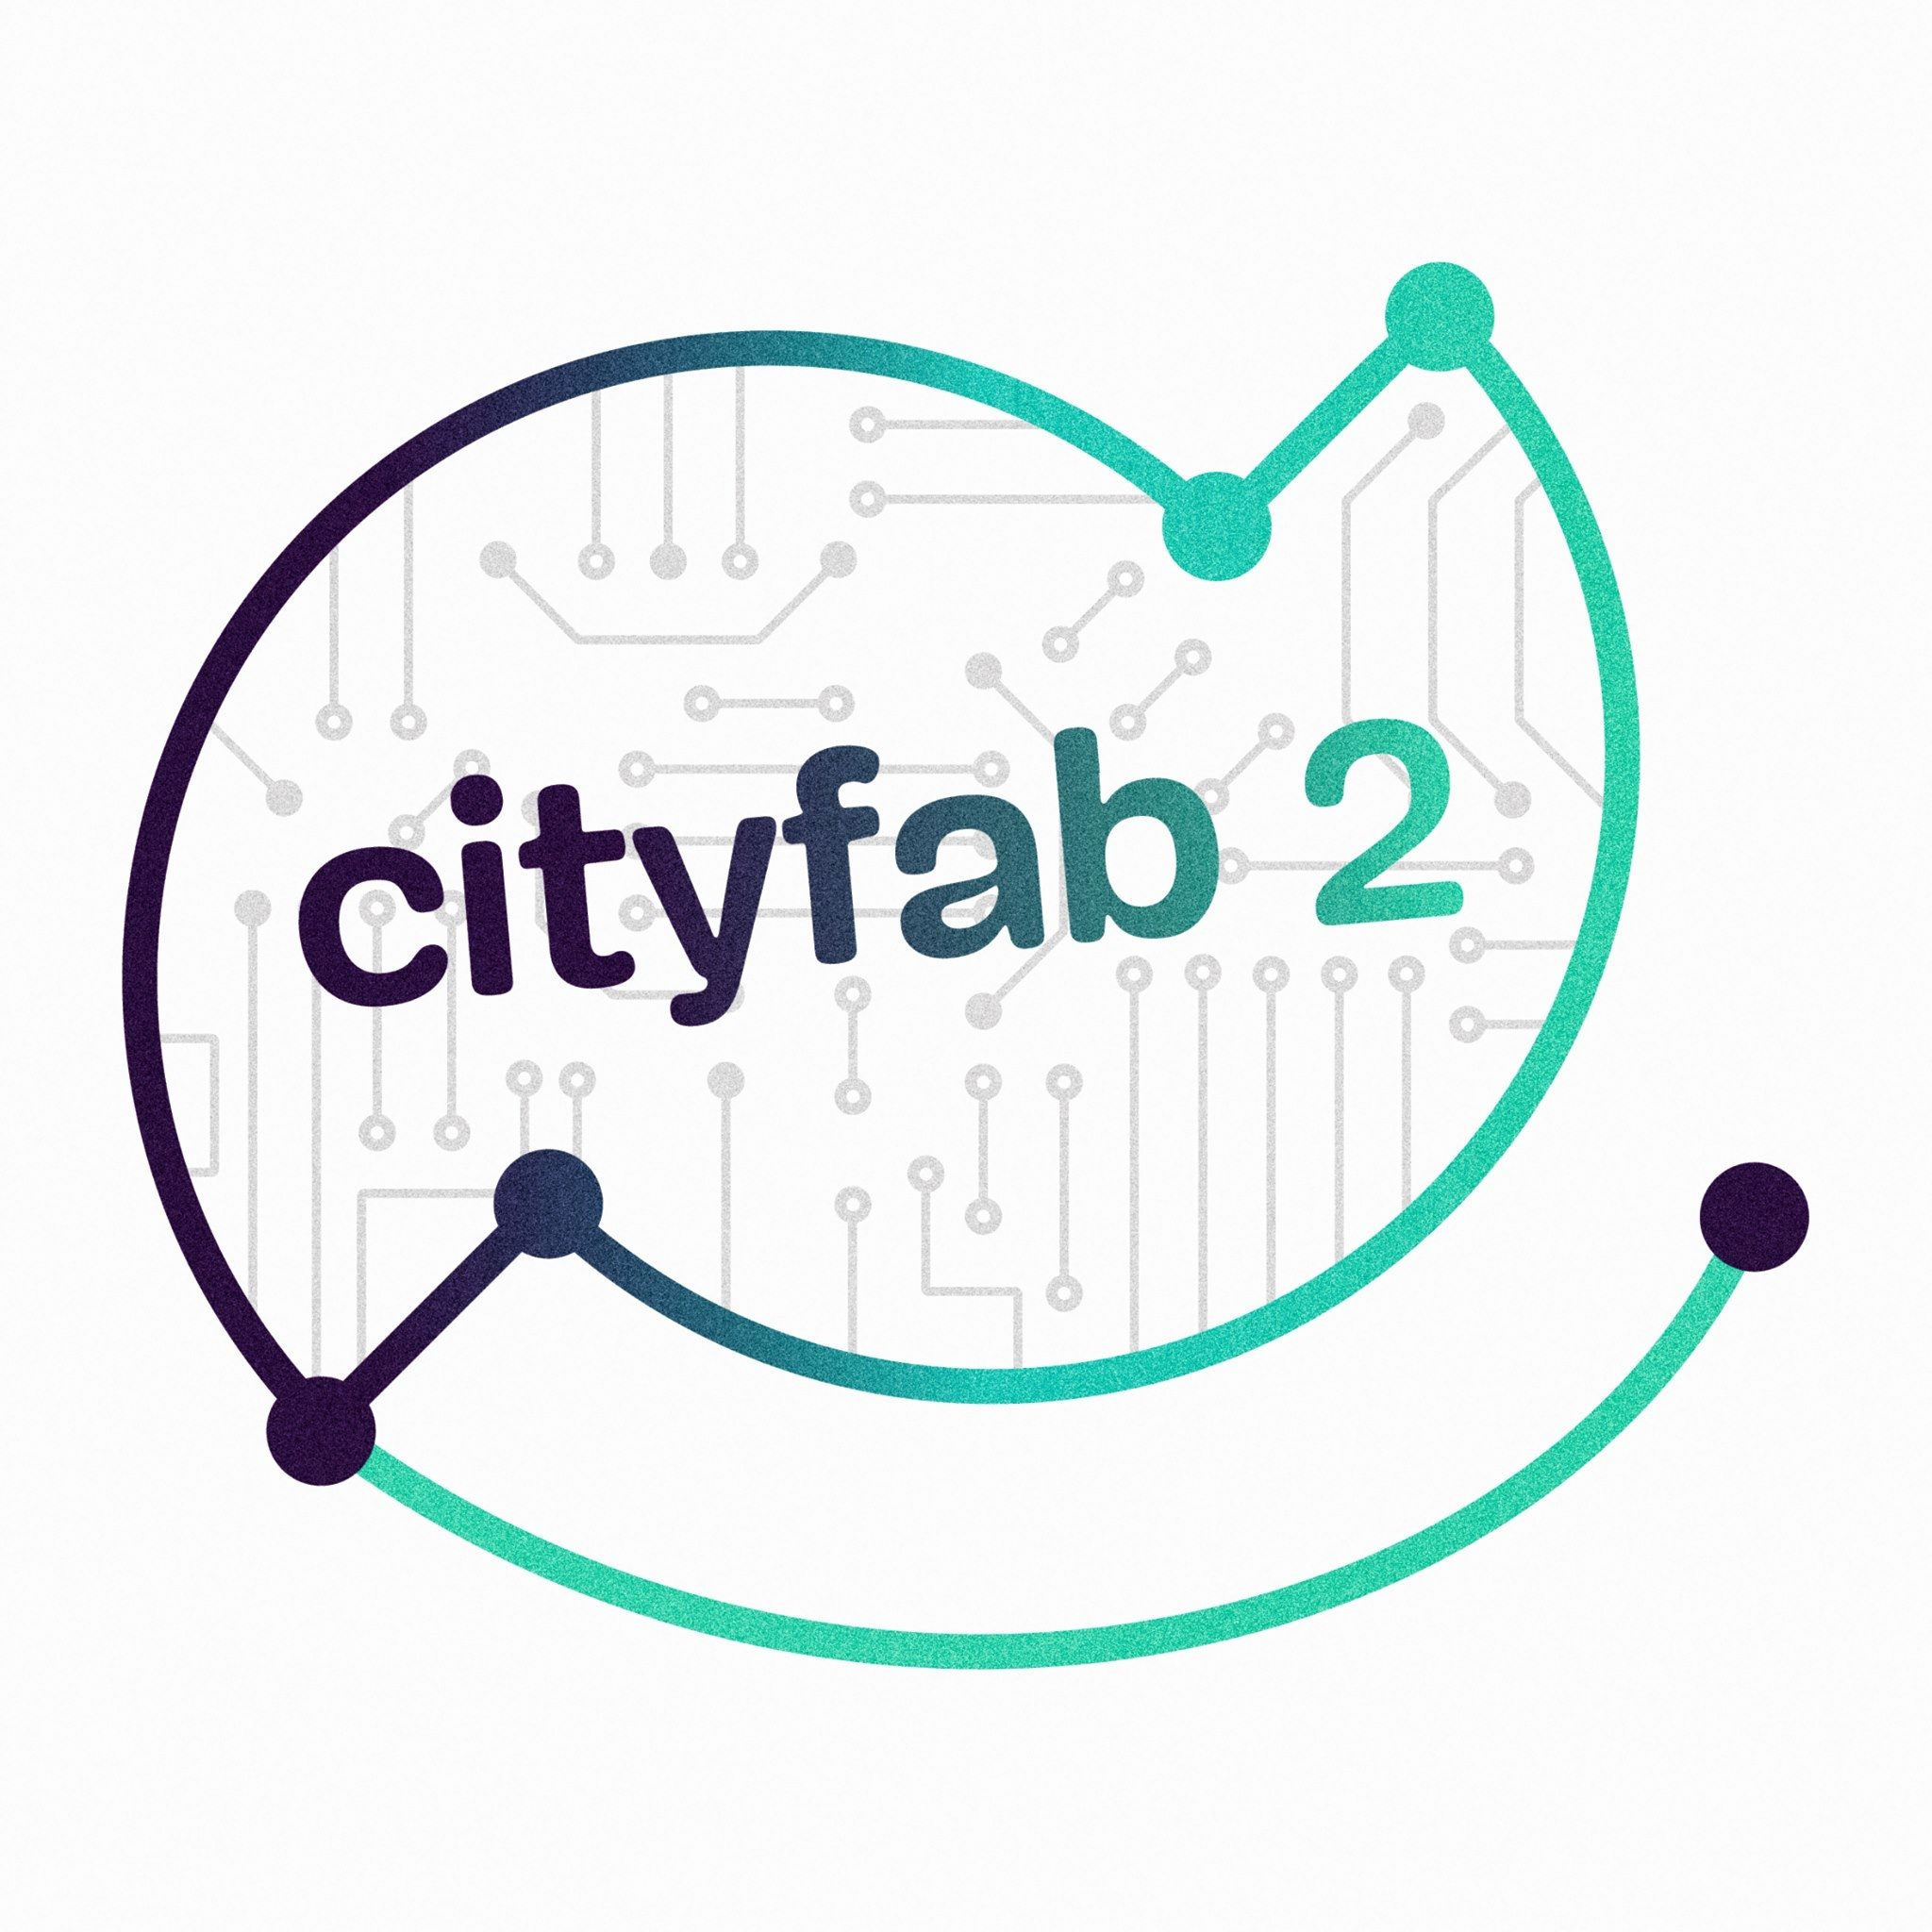 Cityfab 2